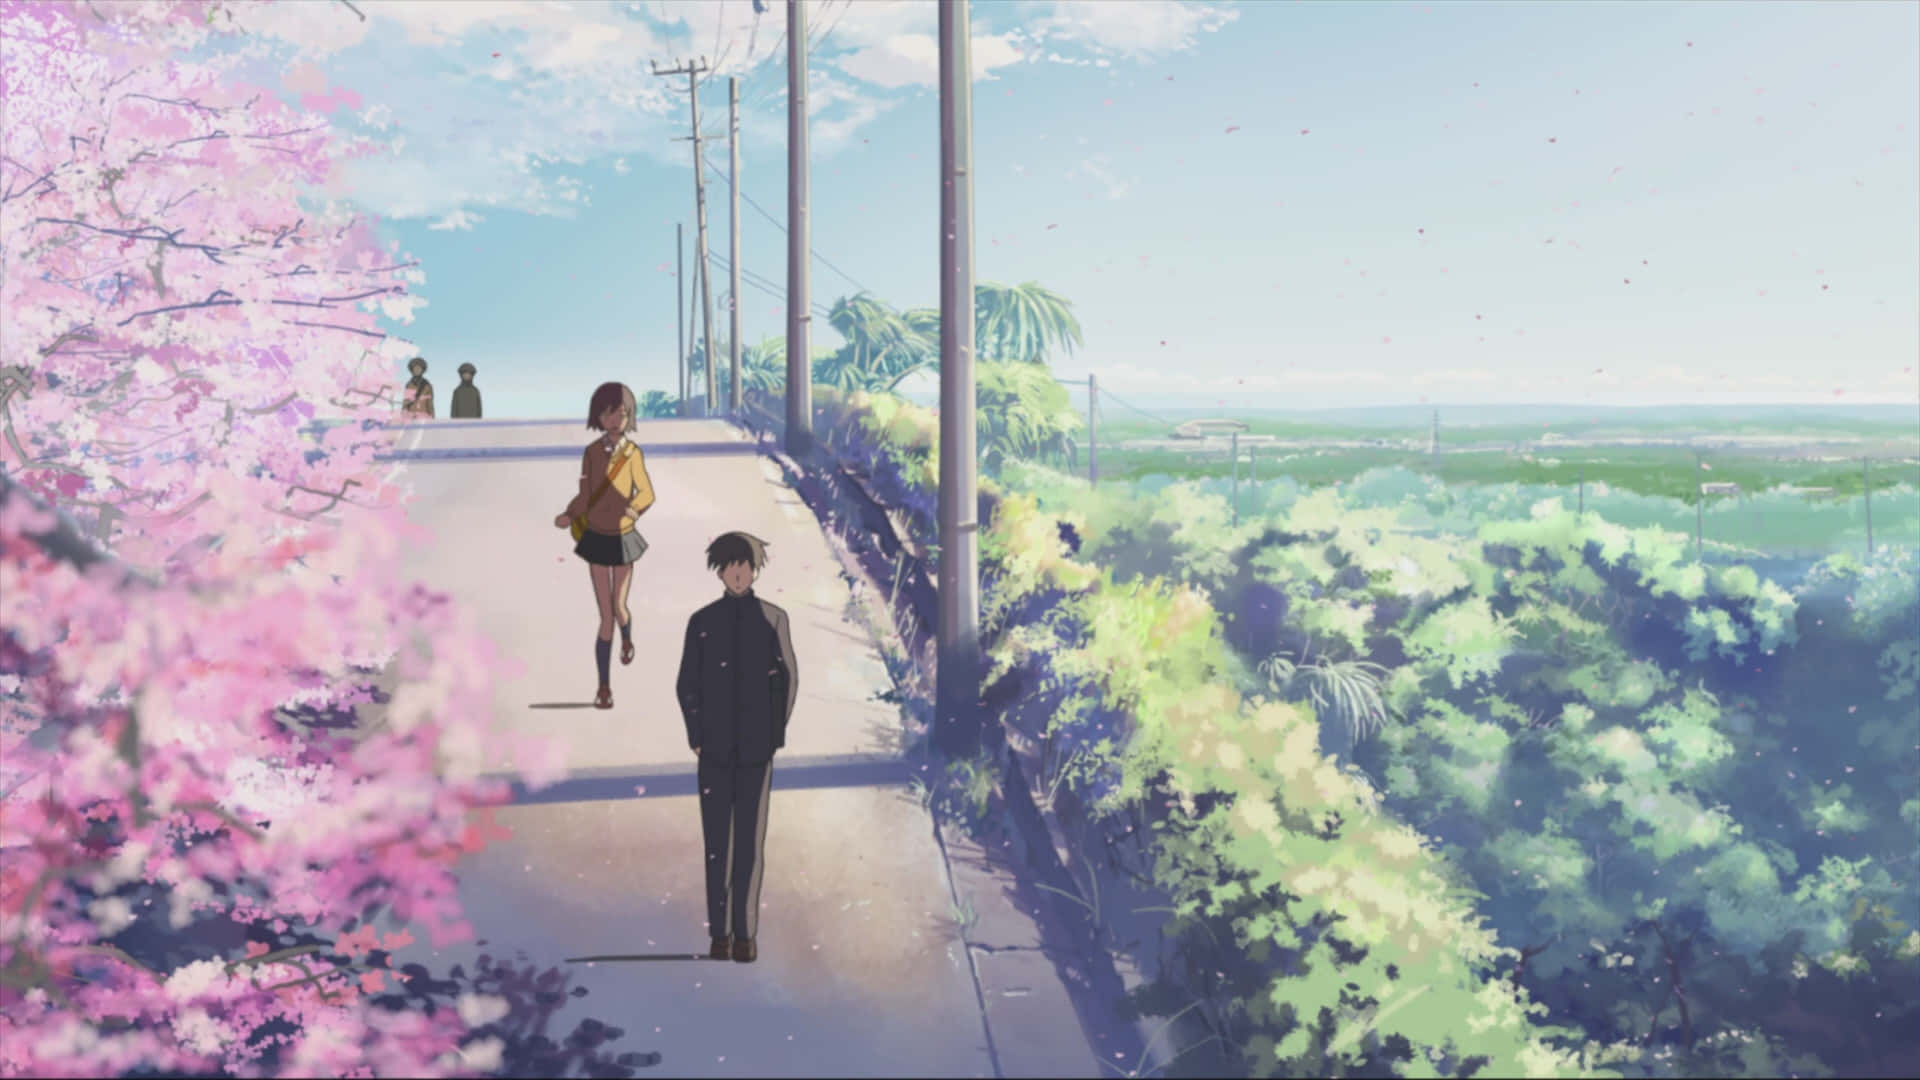 "The work of acclaimed Director Makoto Shinkai"